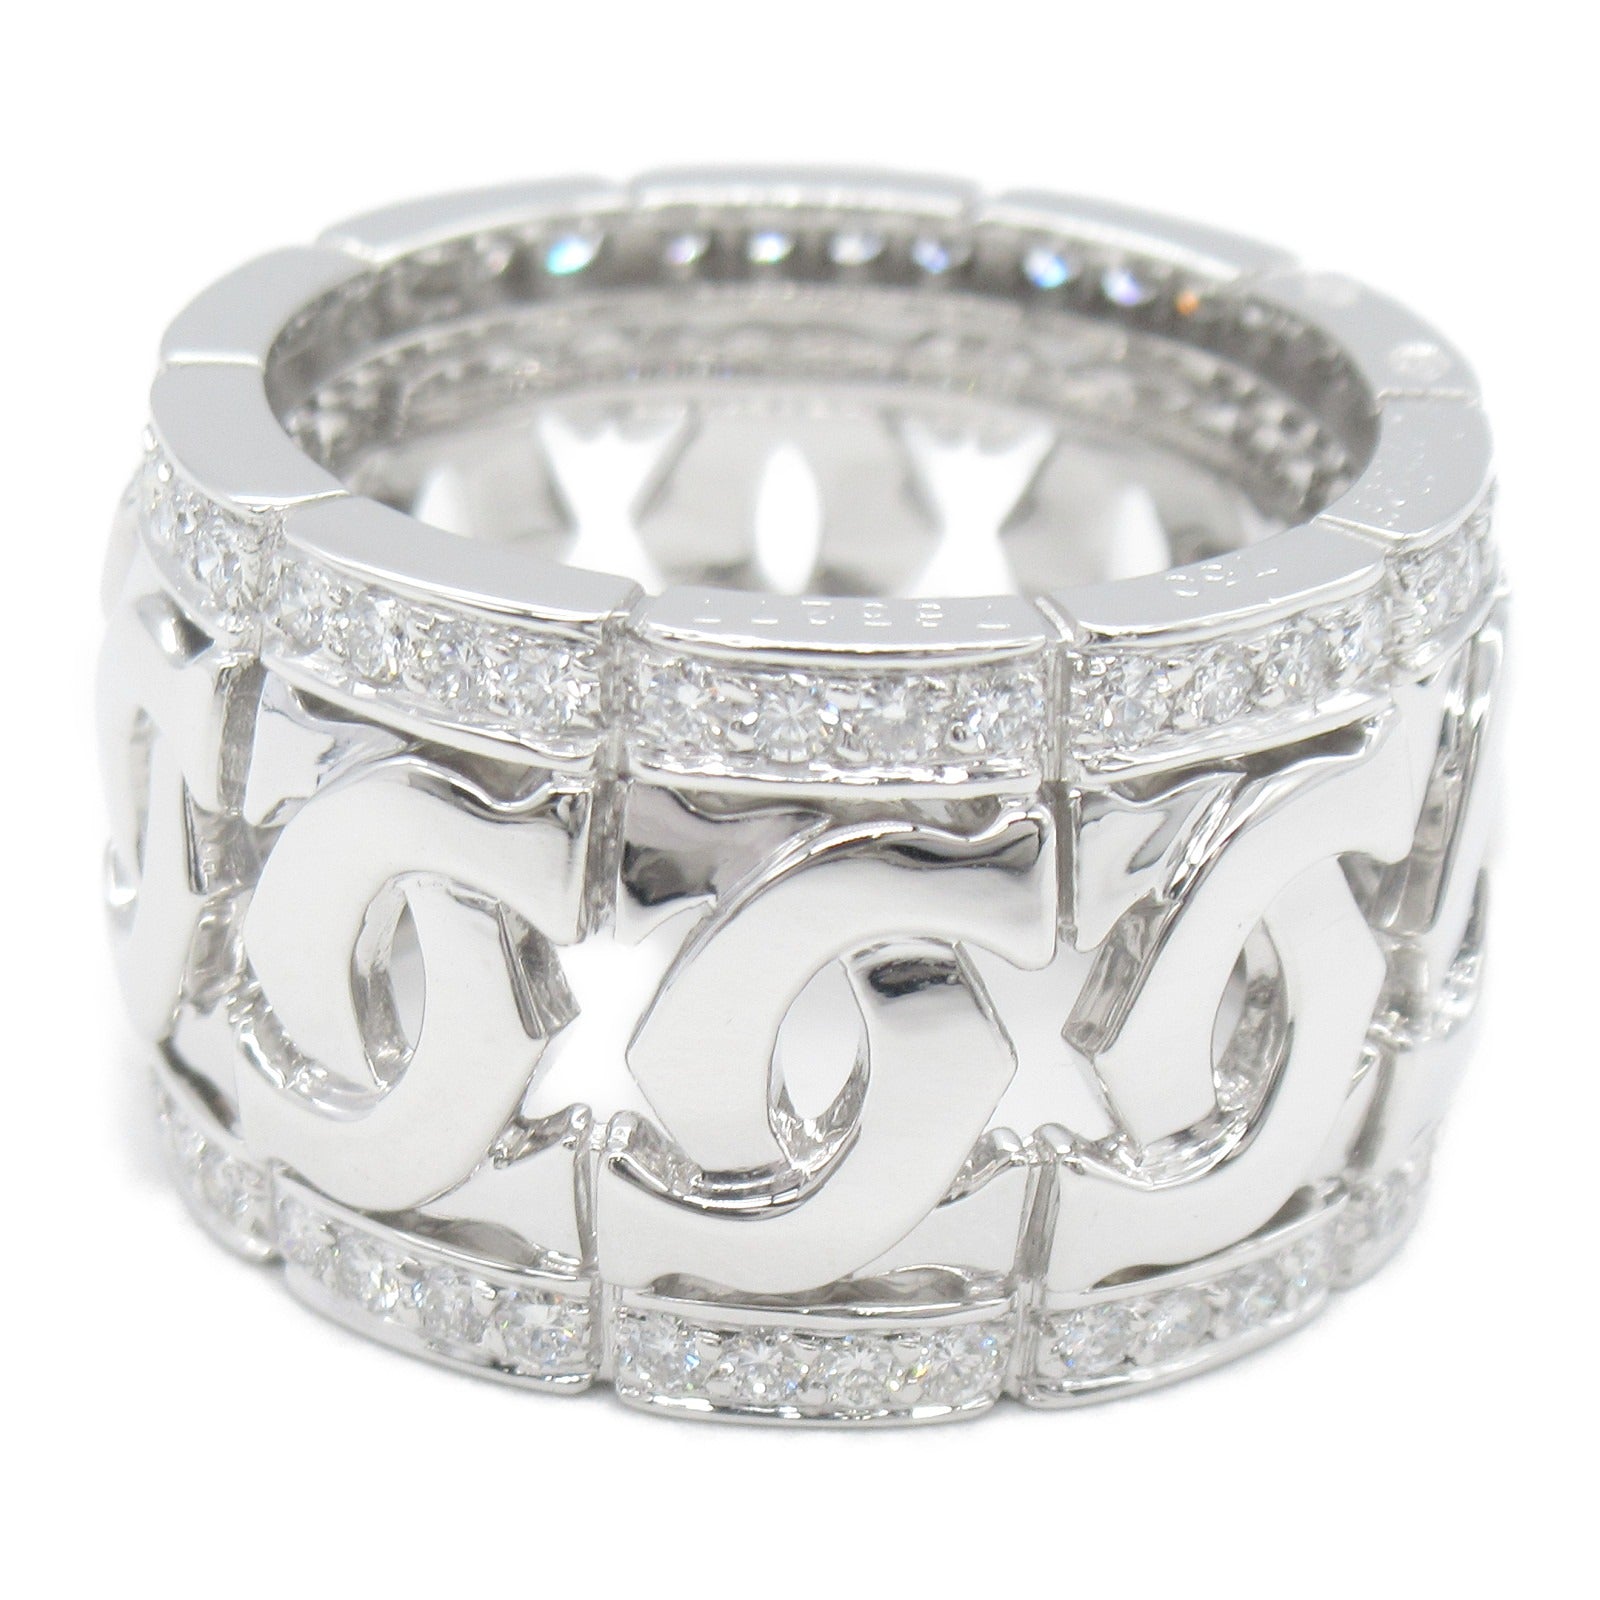 Cartier Andorra Diamond Ring Ring Ring Jewelry K18WG (White G) Diamond   Clear N4113900